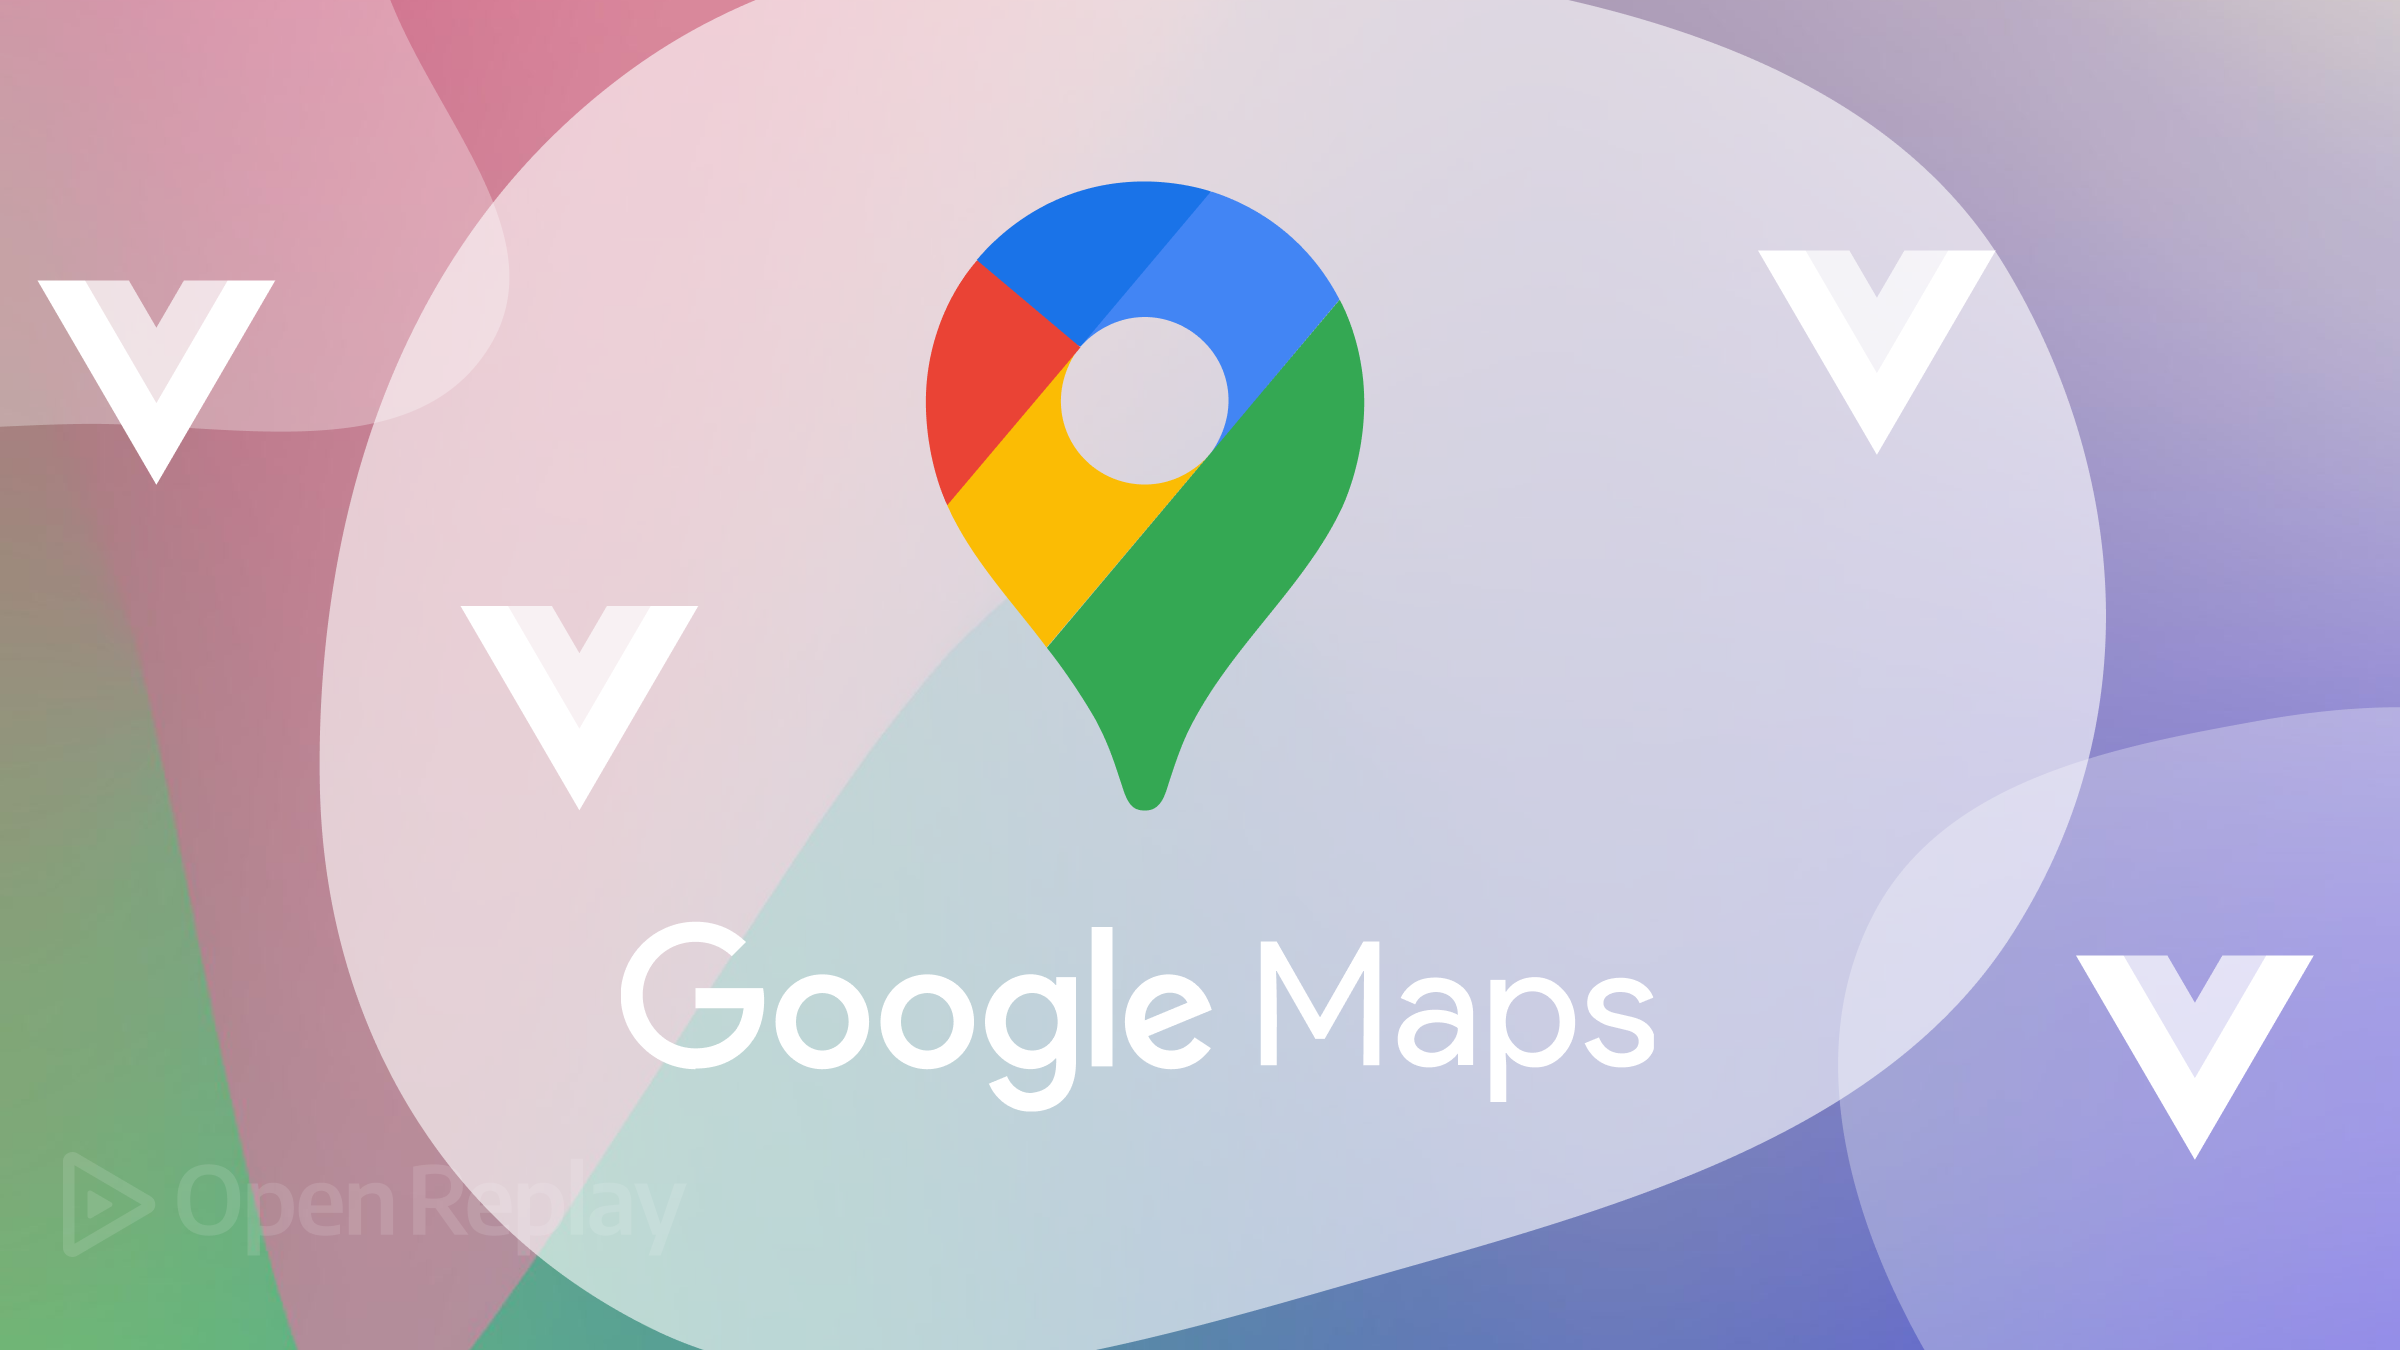 Integrating Google Maps into Vue applications